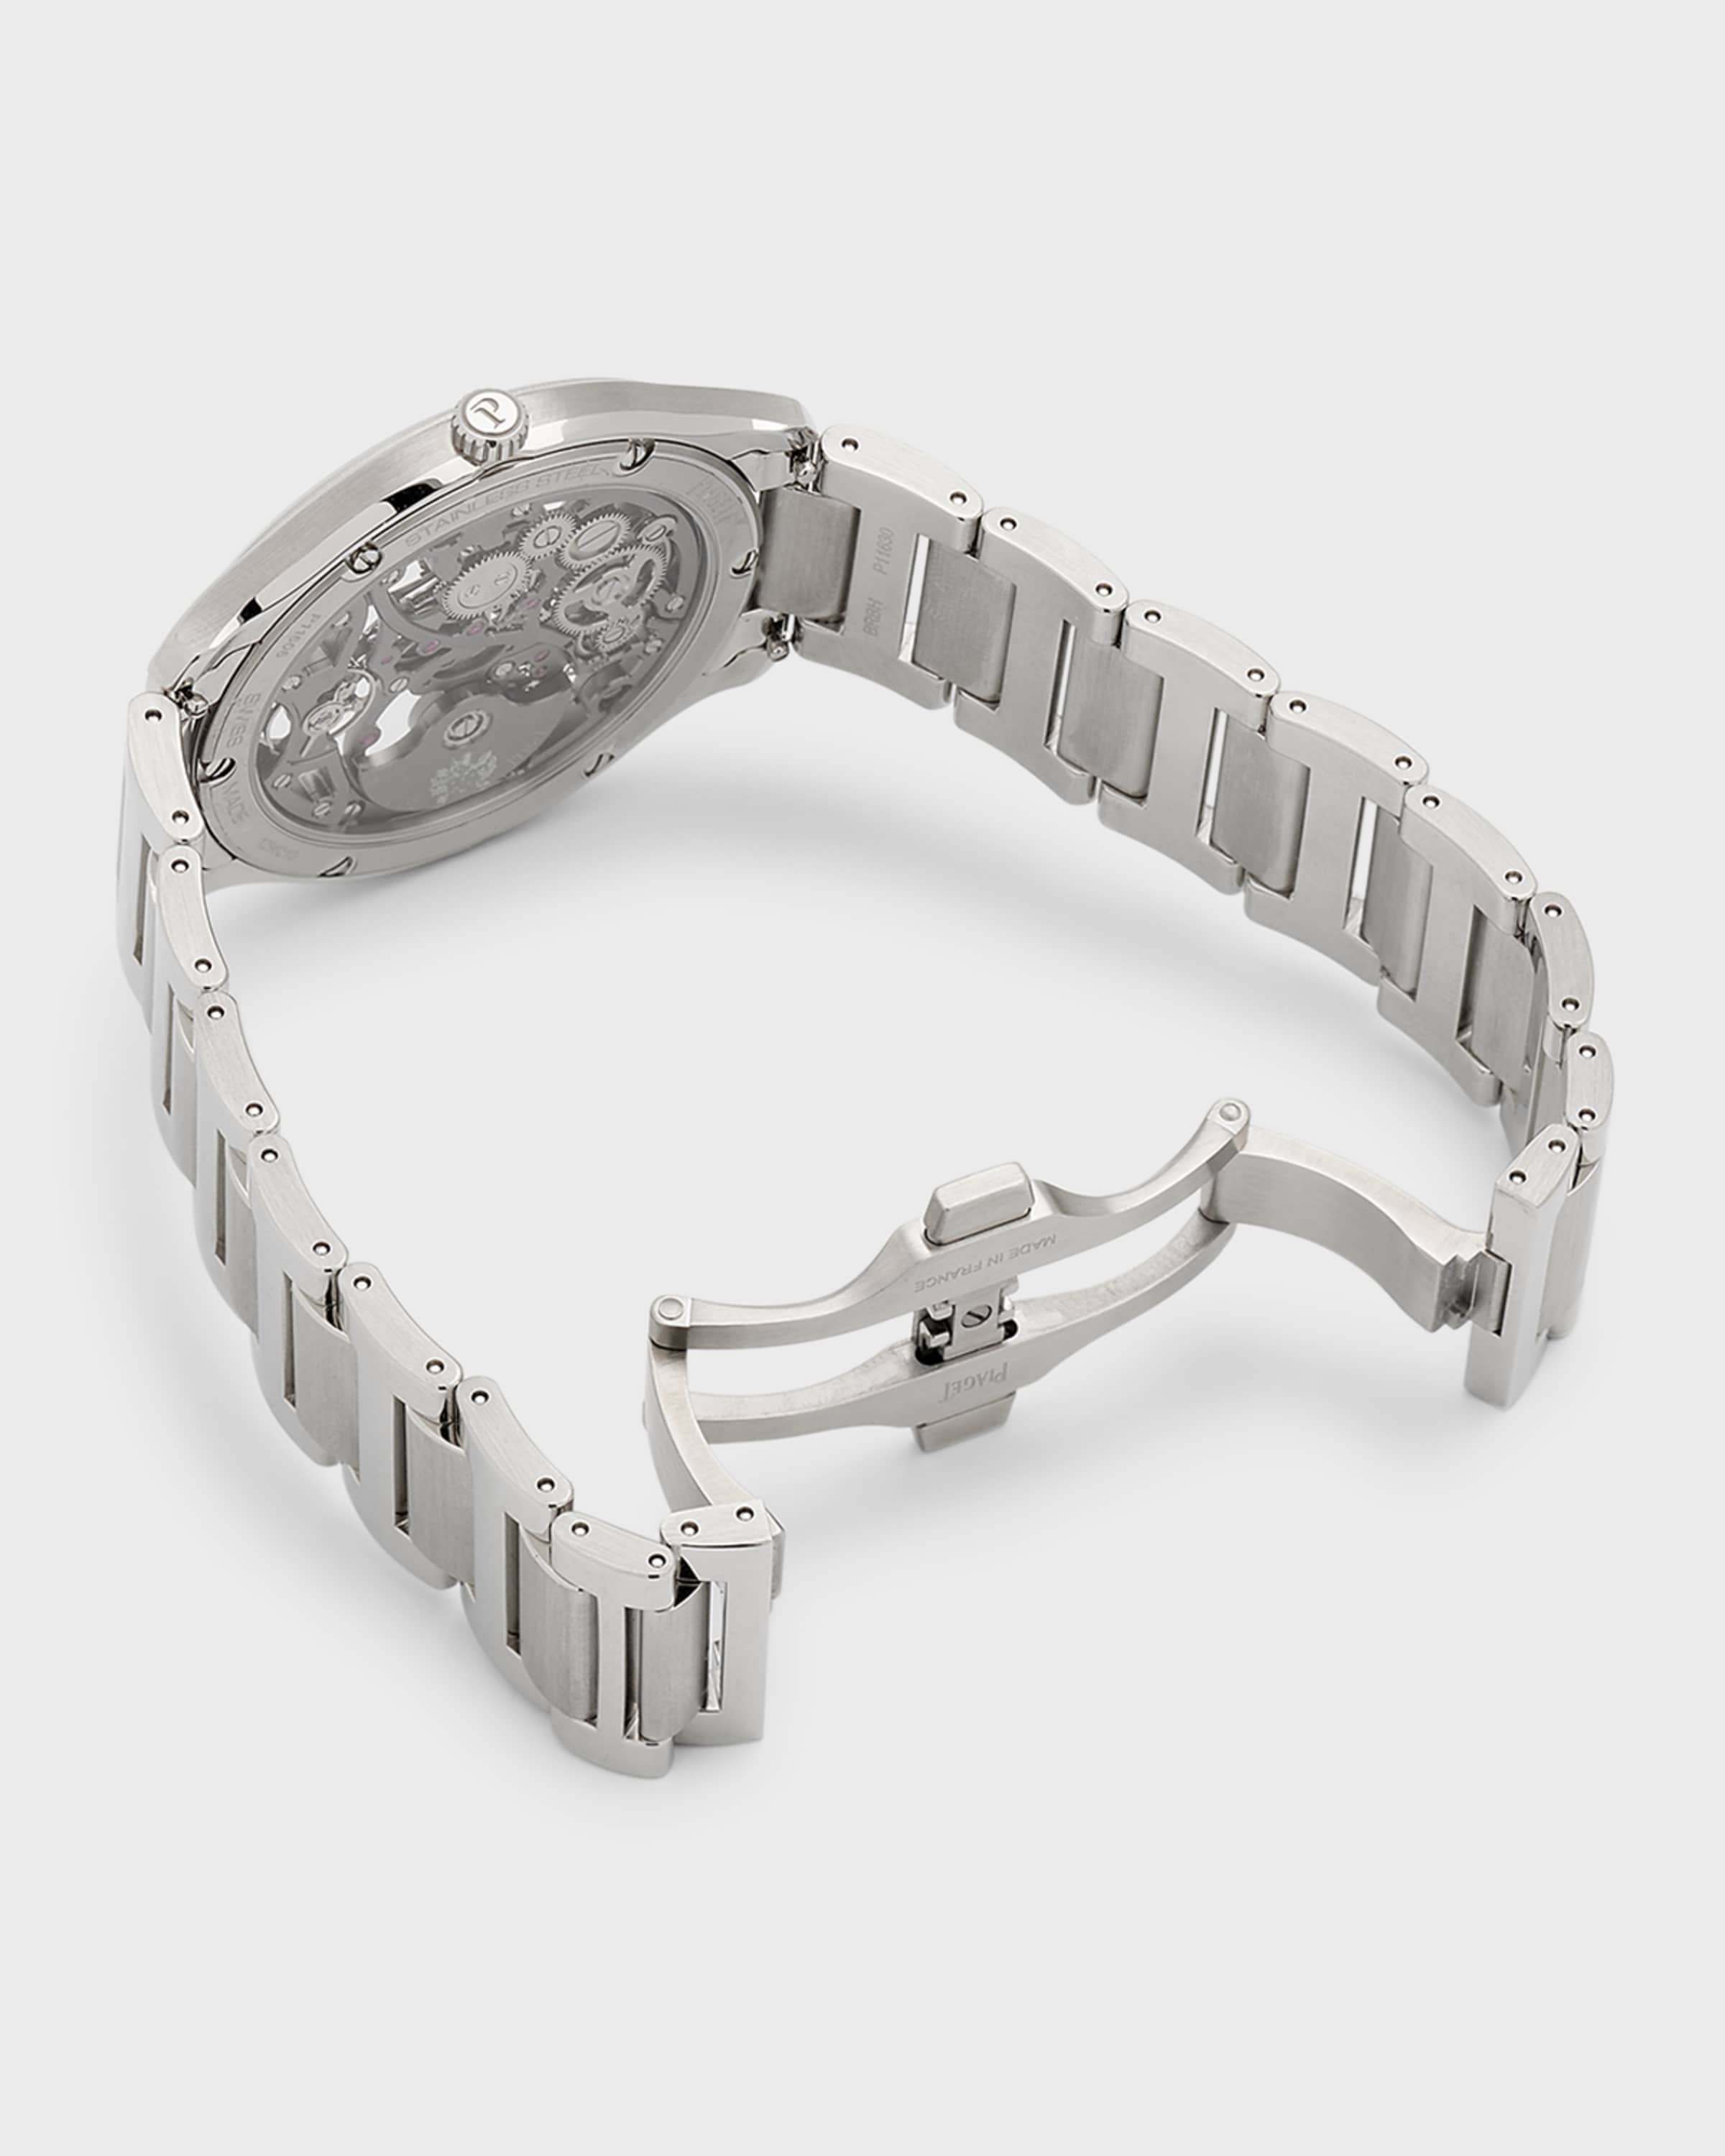 42mm Polo Skeleton Watch with Bracelet Strap, Gray - 4